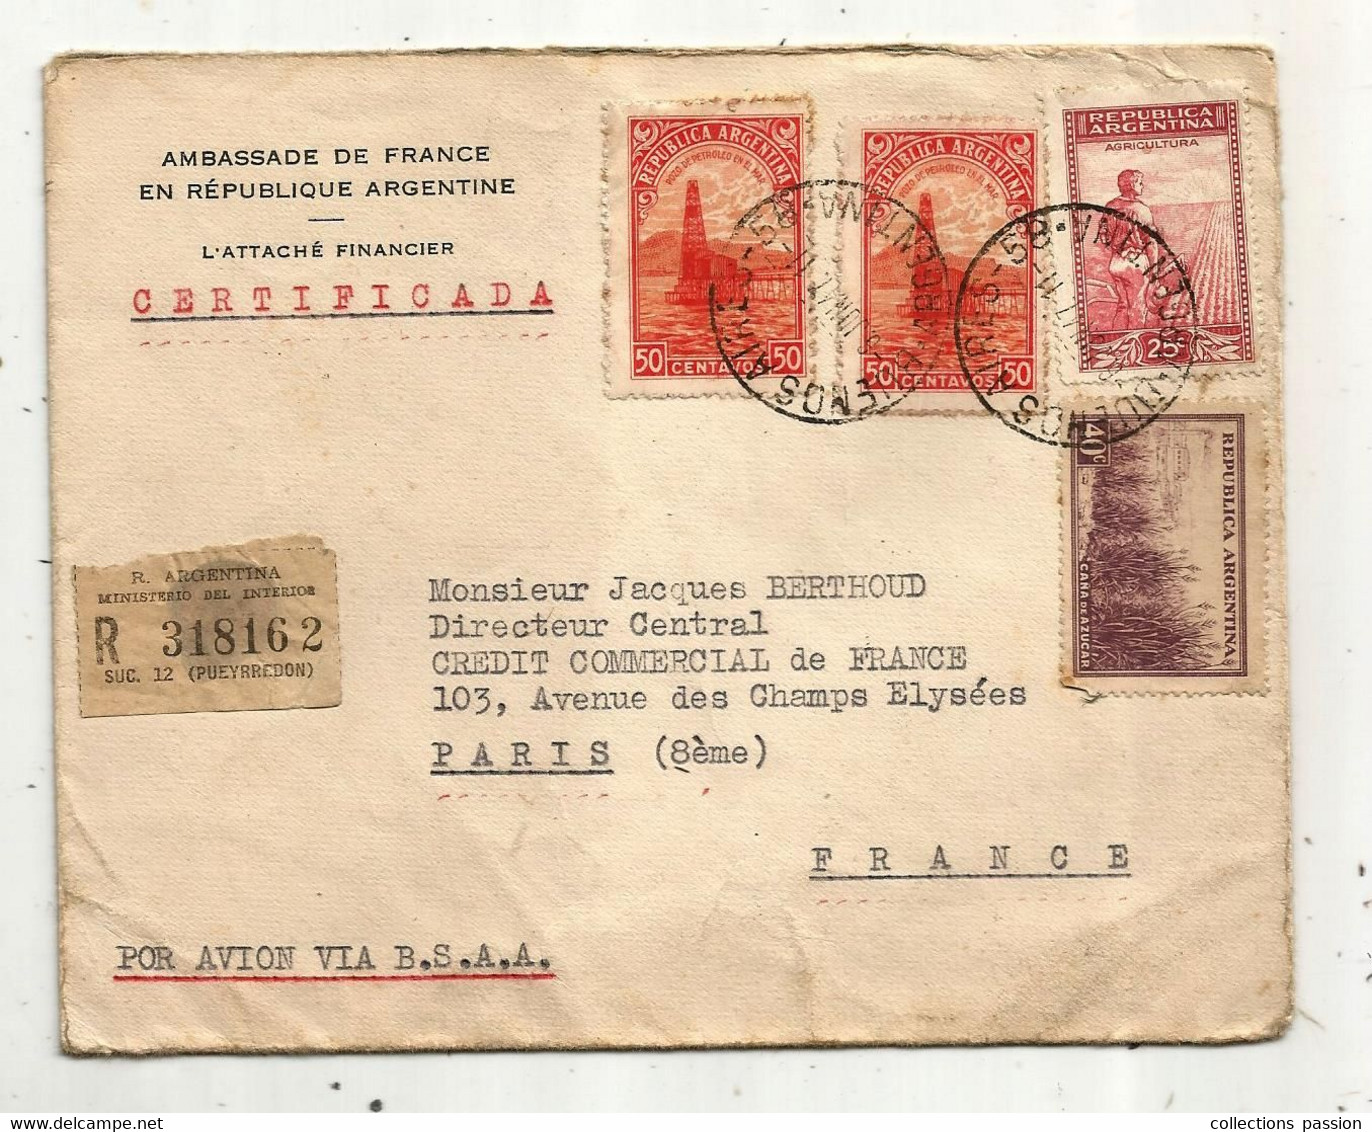 Lettre , Republica Argentina , BUENOS AIRES 58 ,1947, Ambassade De France ,CERTIFICADA ,R Suc. 12 (PUEYRREDON) - Storia Postale